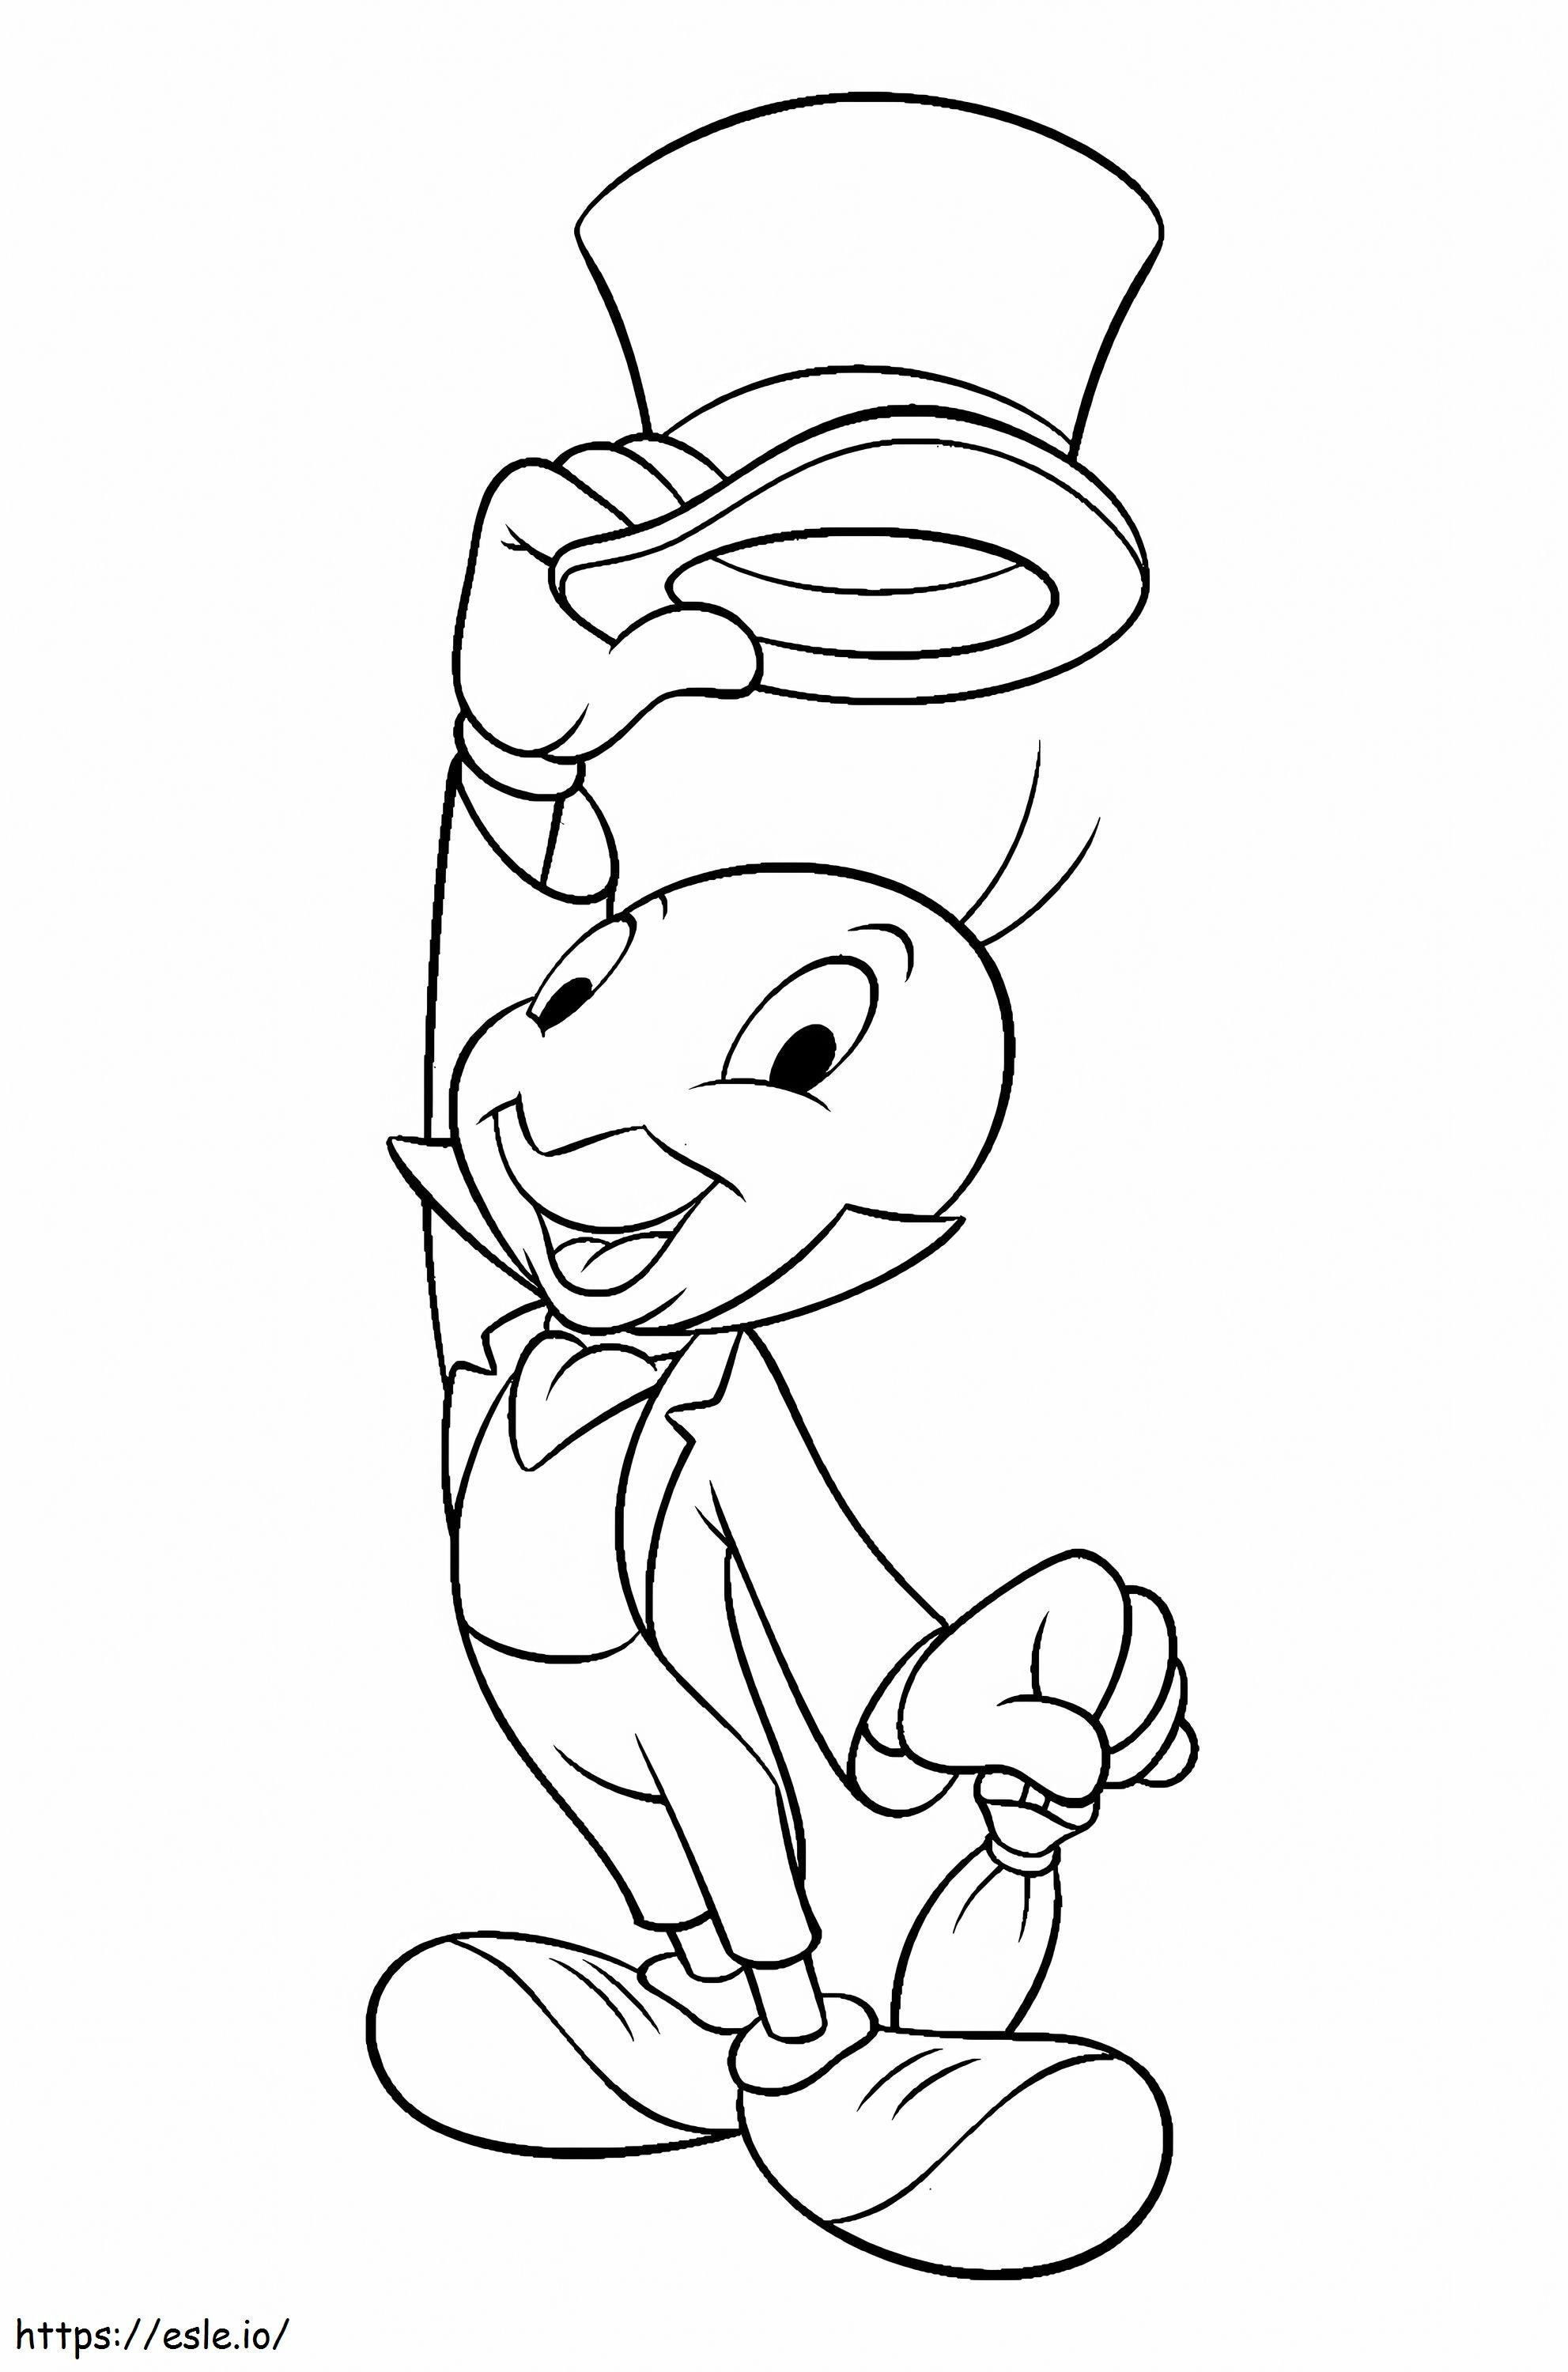 Coloriage 1545725391 Disney Jiminy Cricket 14 I Imprimable Gratuitement Disney Jiminy Cricket Noël Pour Les Enfants Imprimer Dessin Animé Disney Jiminy Cricket Noël Pour Presc à imprimer dessin